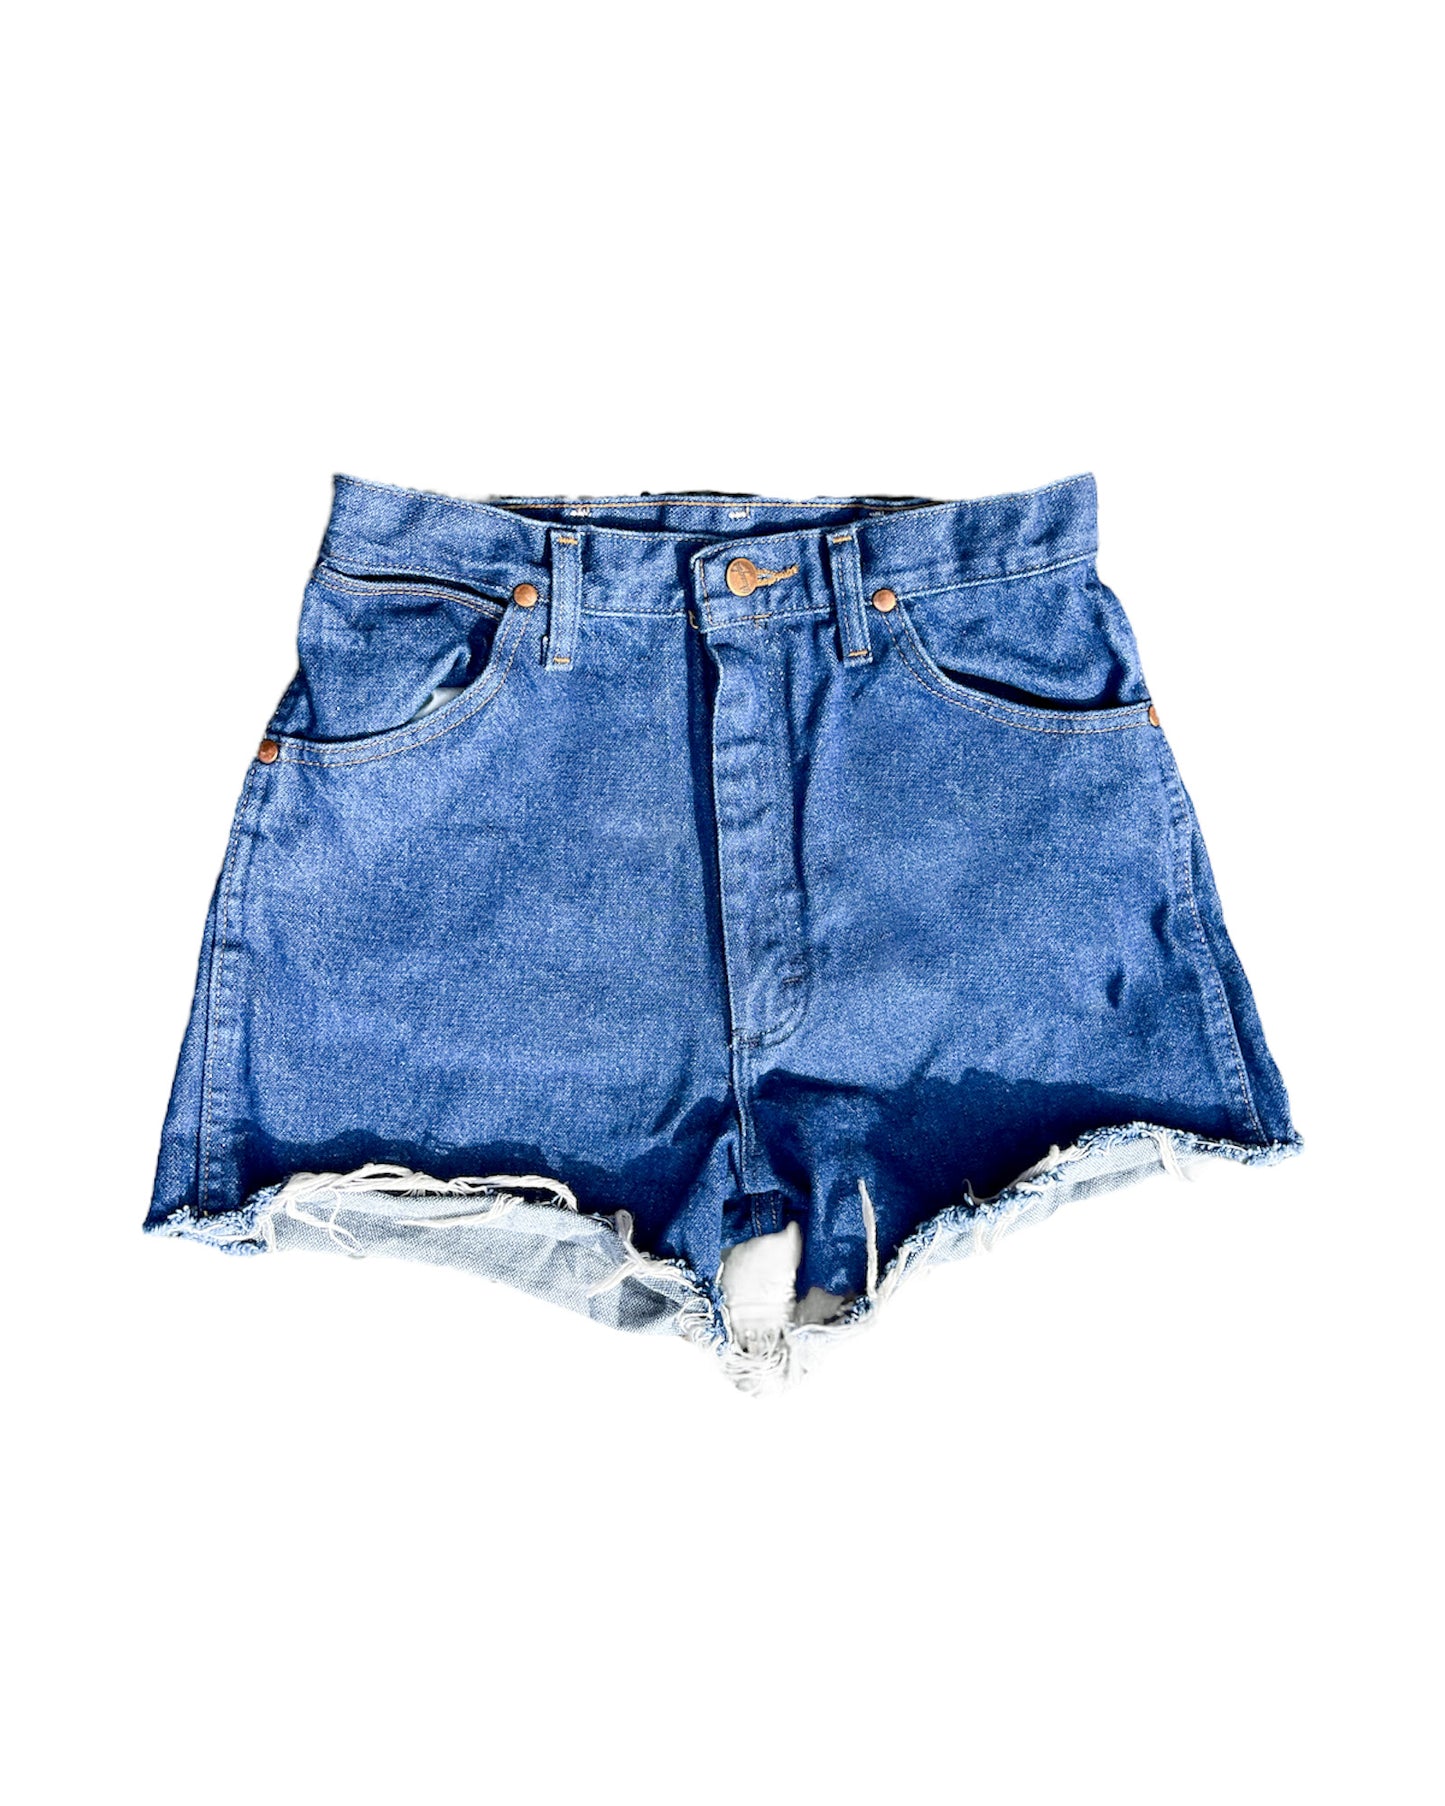 Vintage Wrangler Denim Shorts